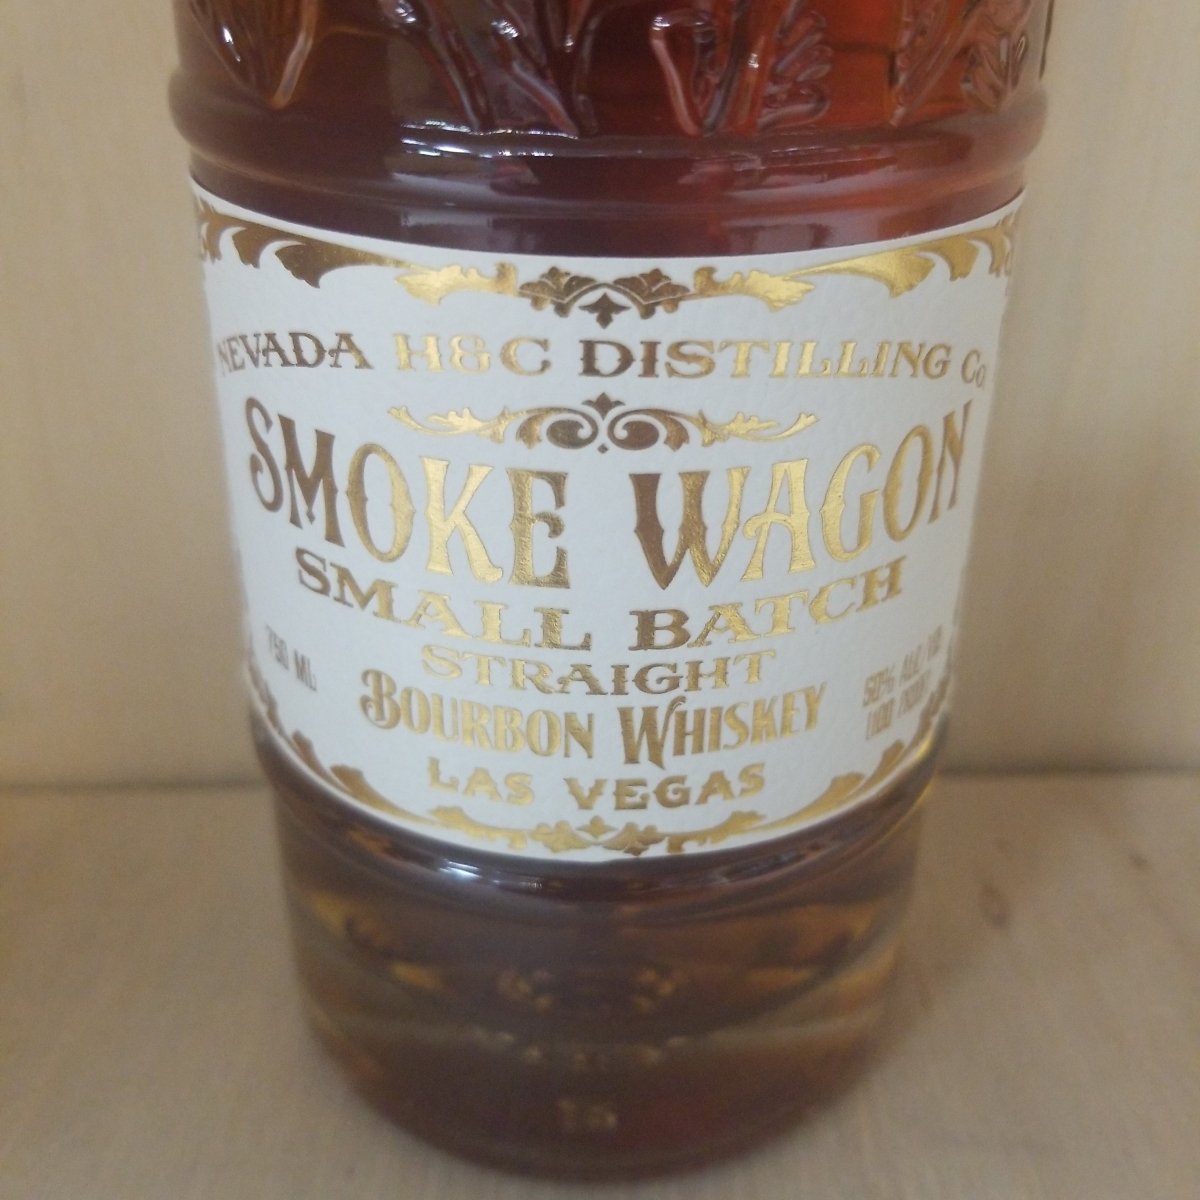 Smoke Wagon Small Batch Straight Bourbon 750ml - Sip &amp; Say